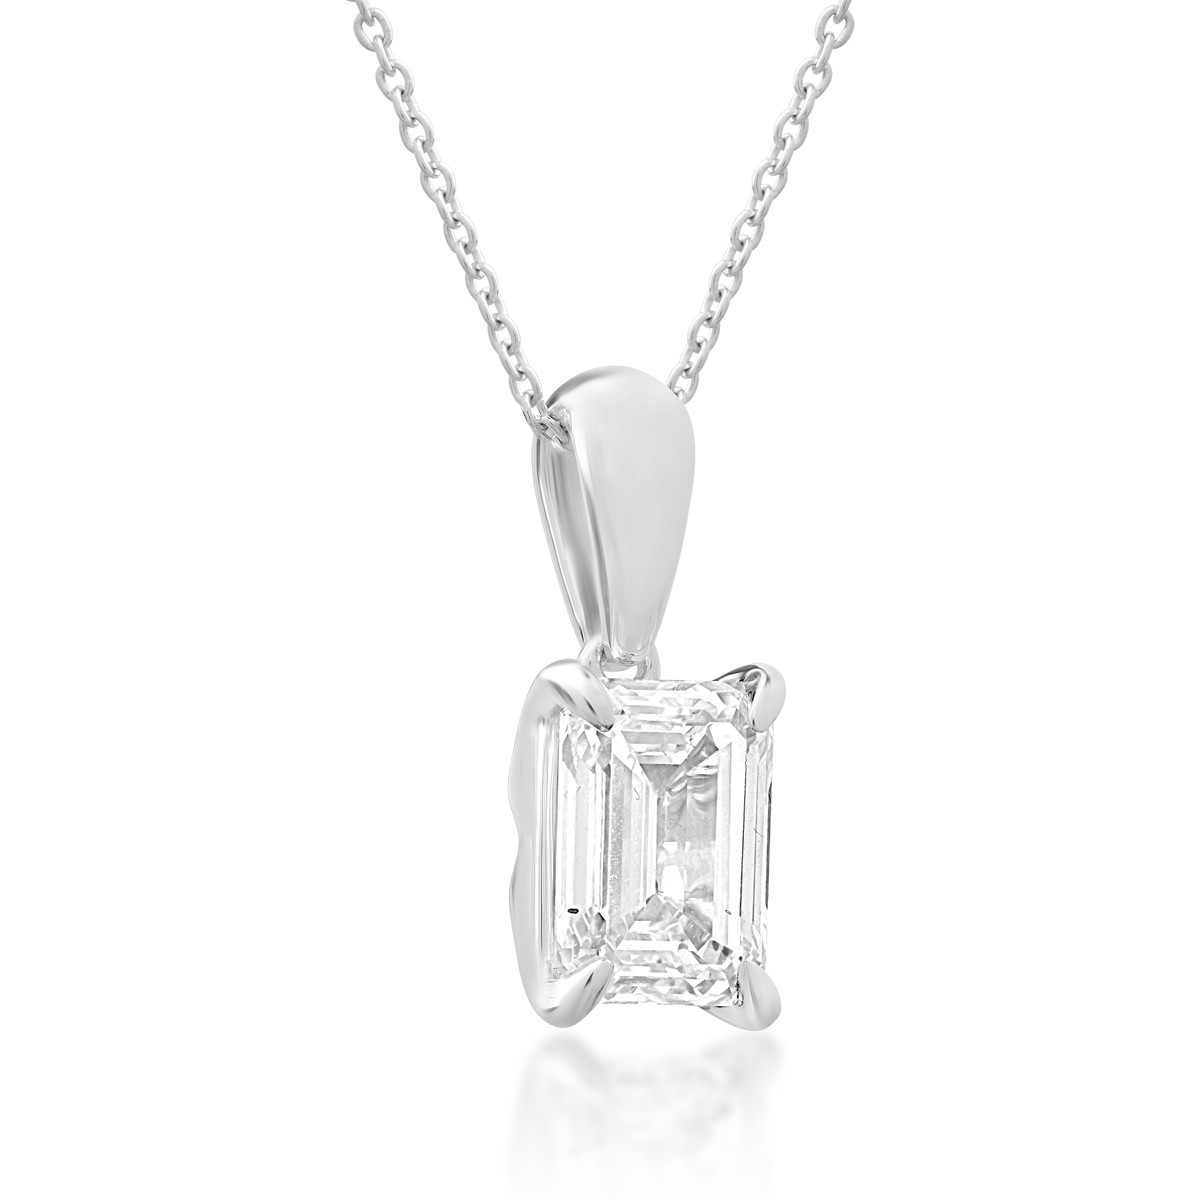 18K white gold pendant chain with 0.61ct diamond